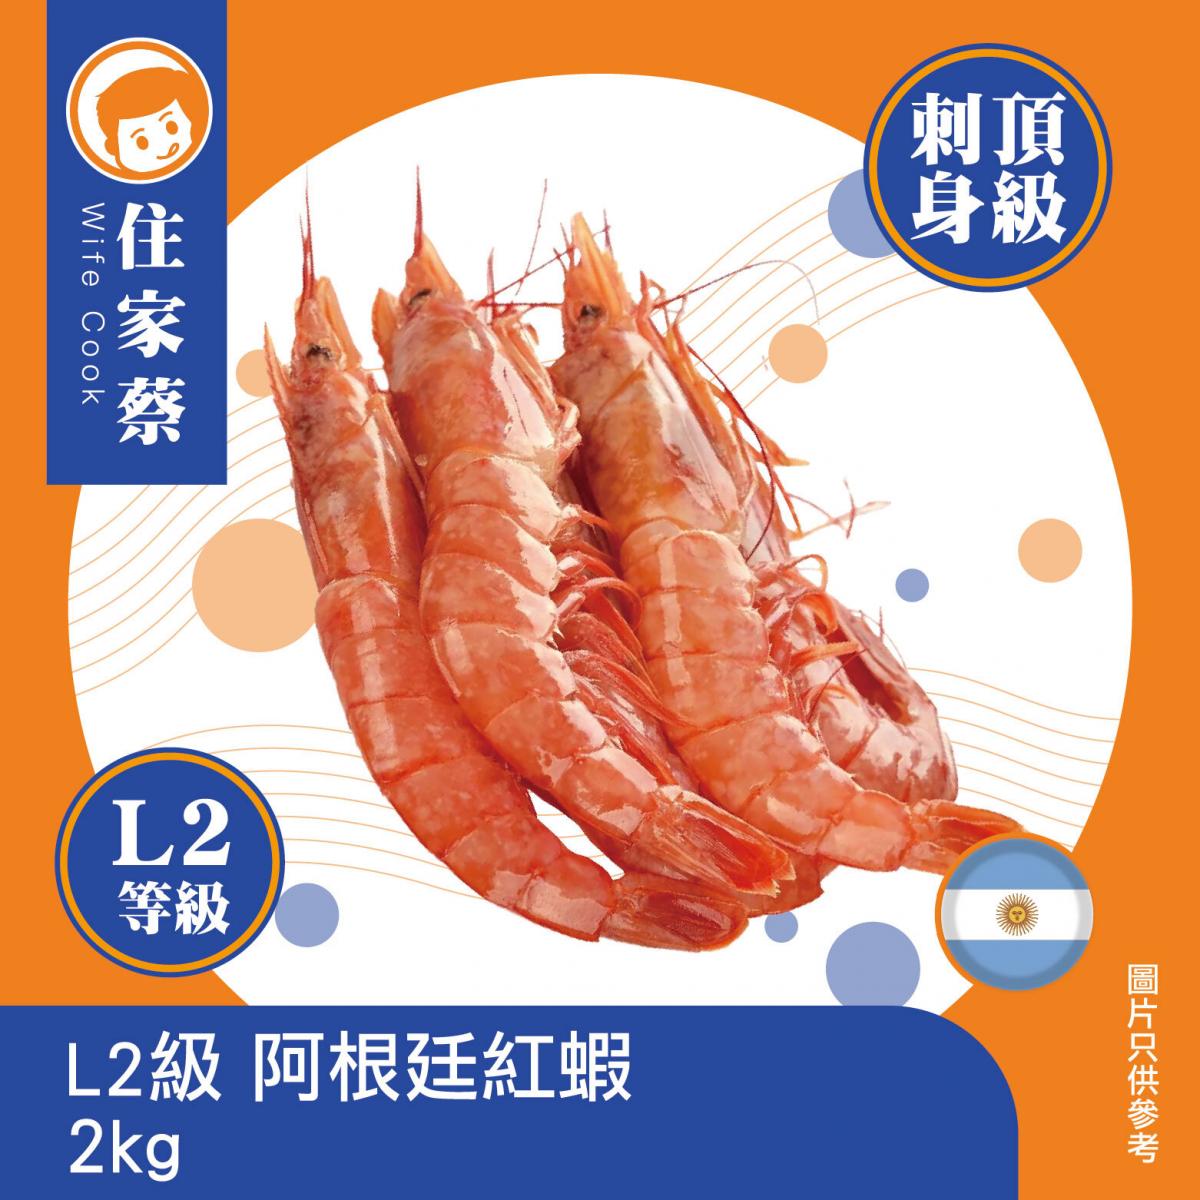 L2級 阿根廷紅蝦 (急凍-18°C)